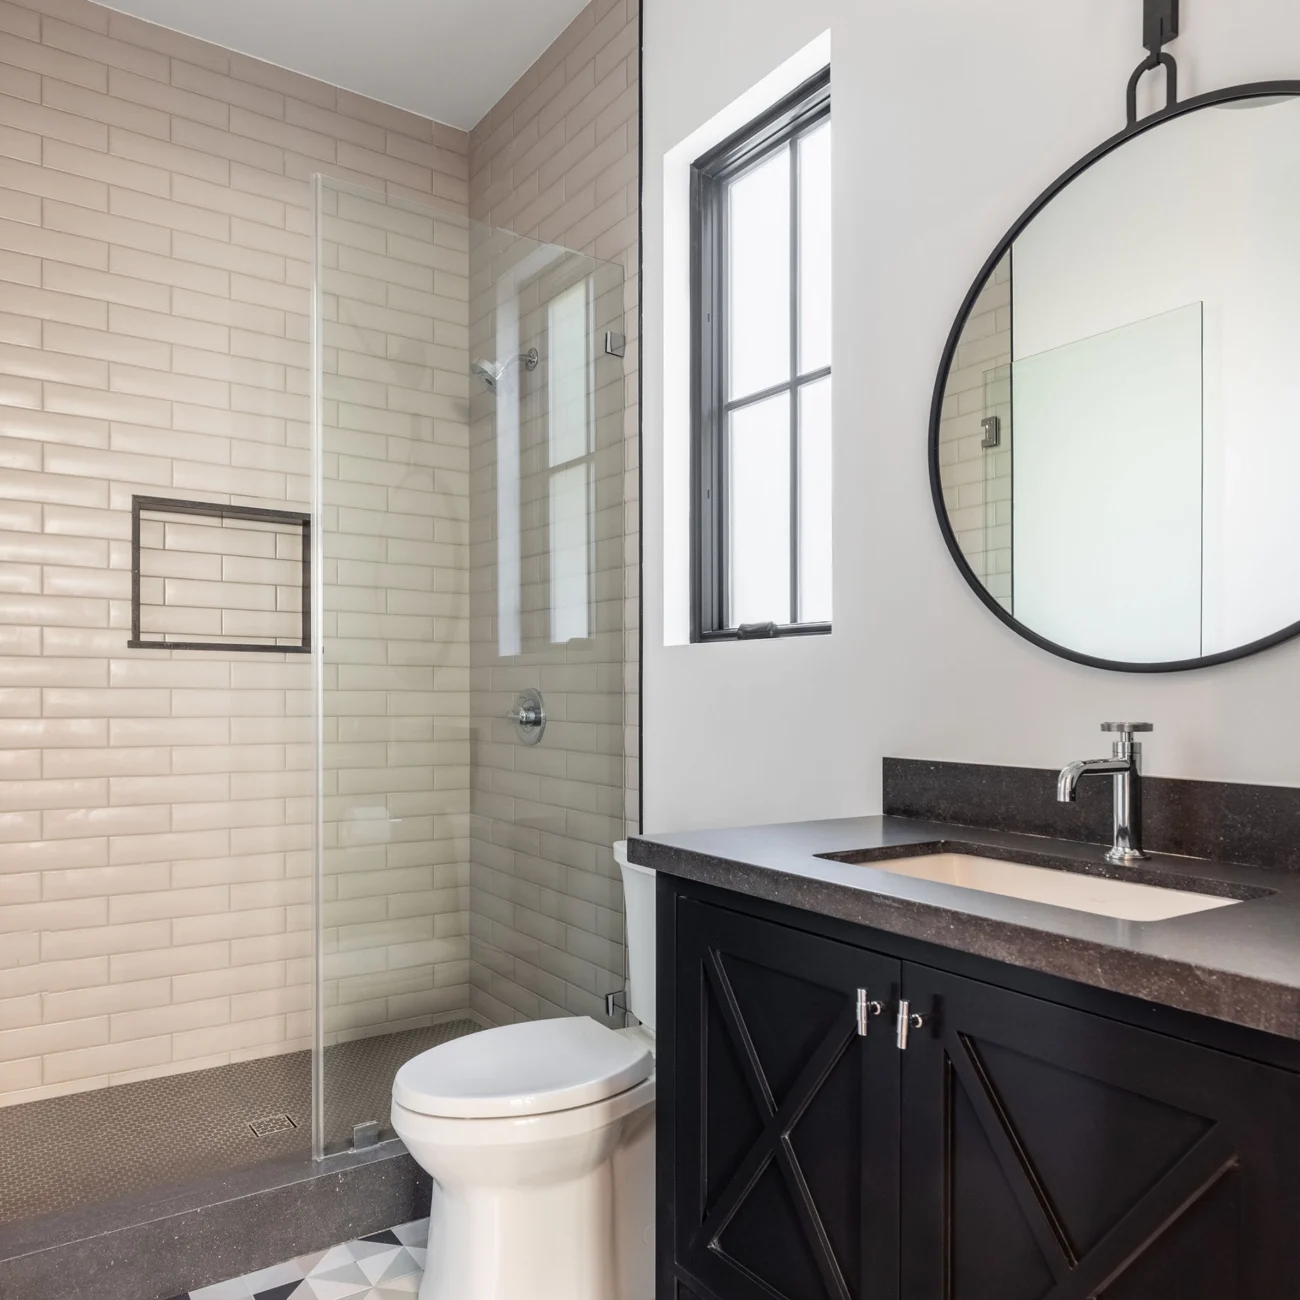 Christine Vroom Interiors | 36th | Bright, white, costal bathroom